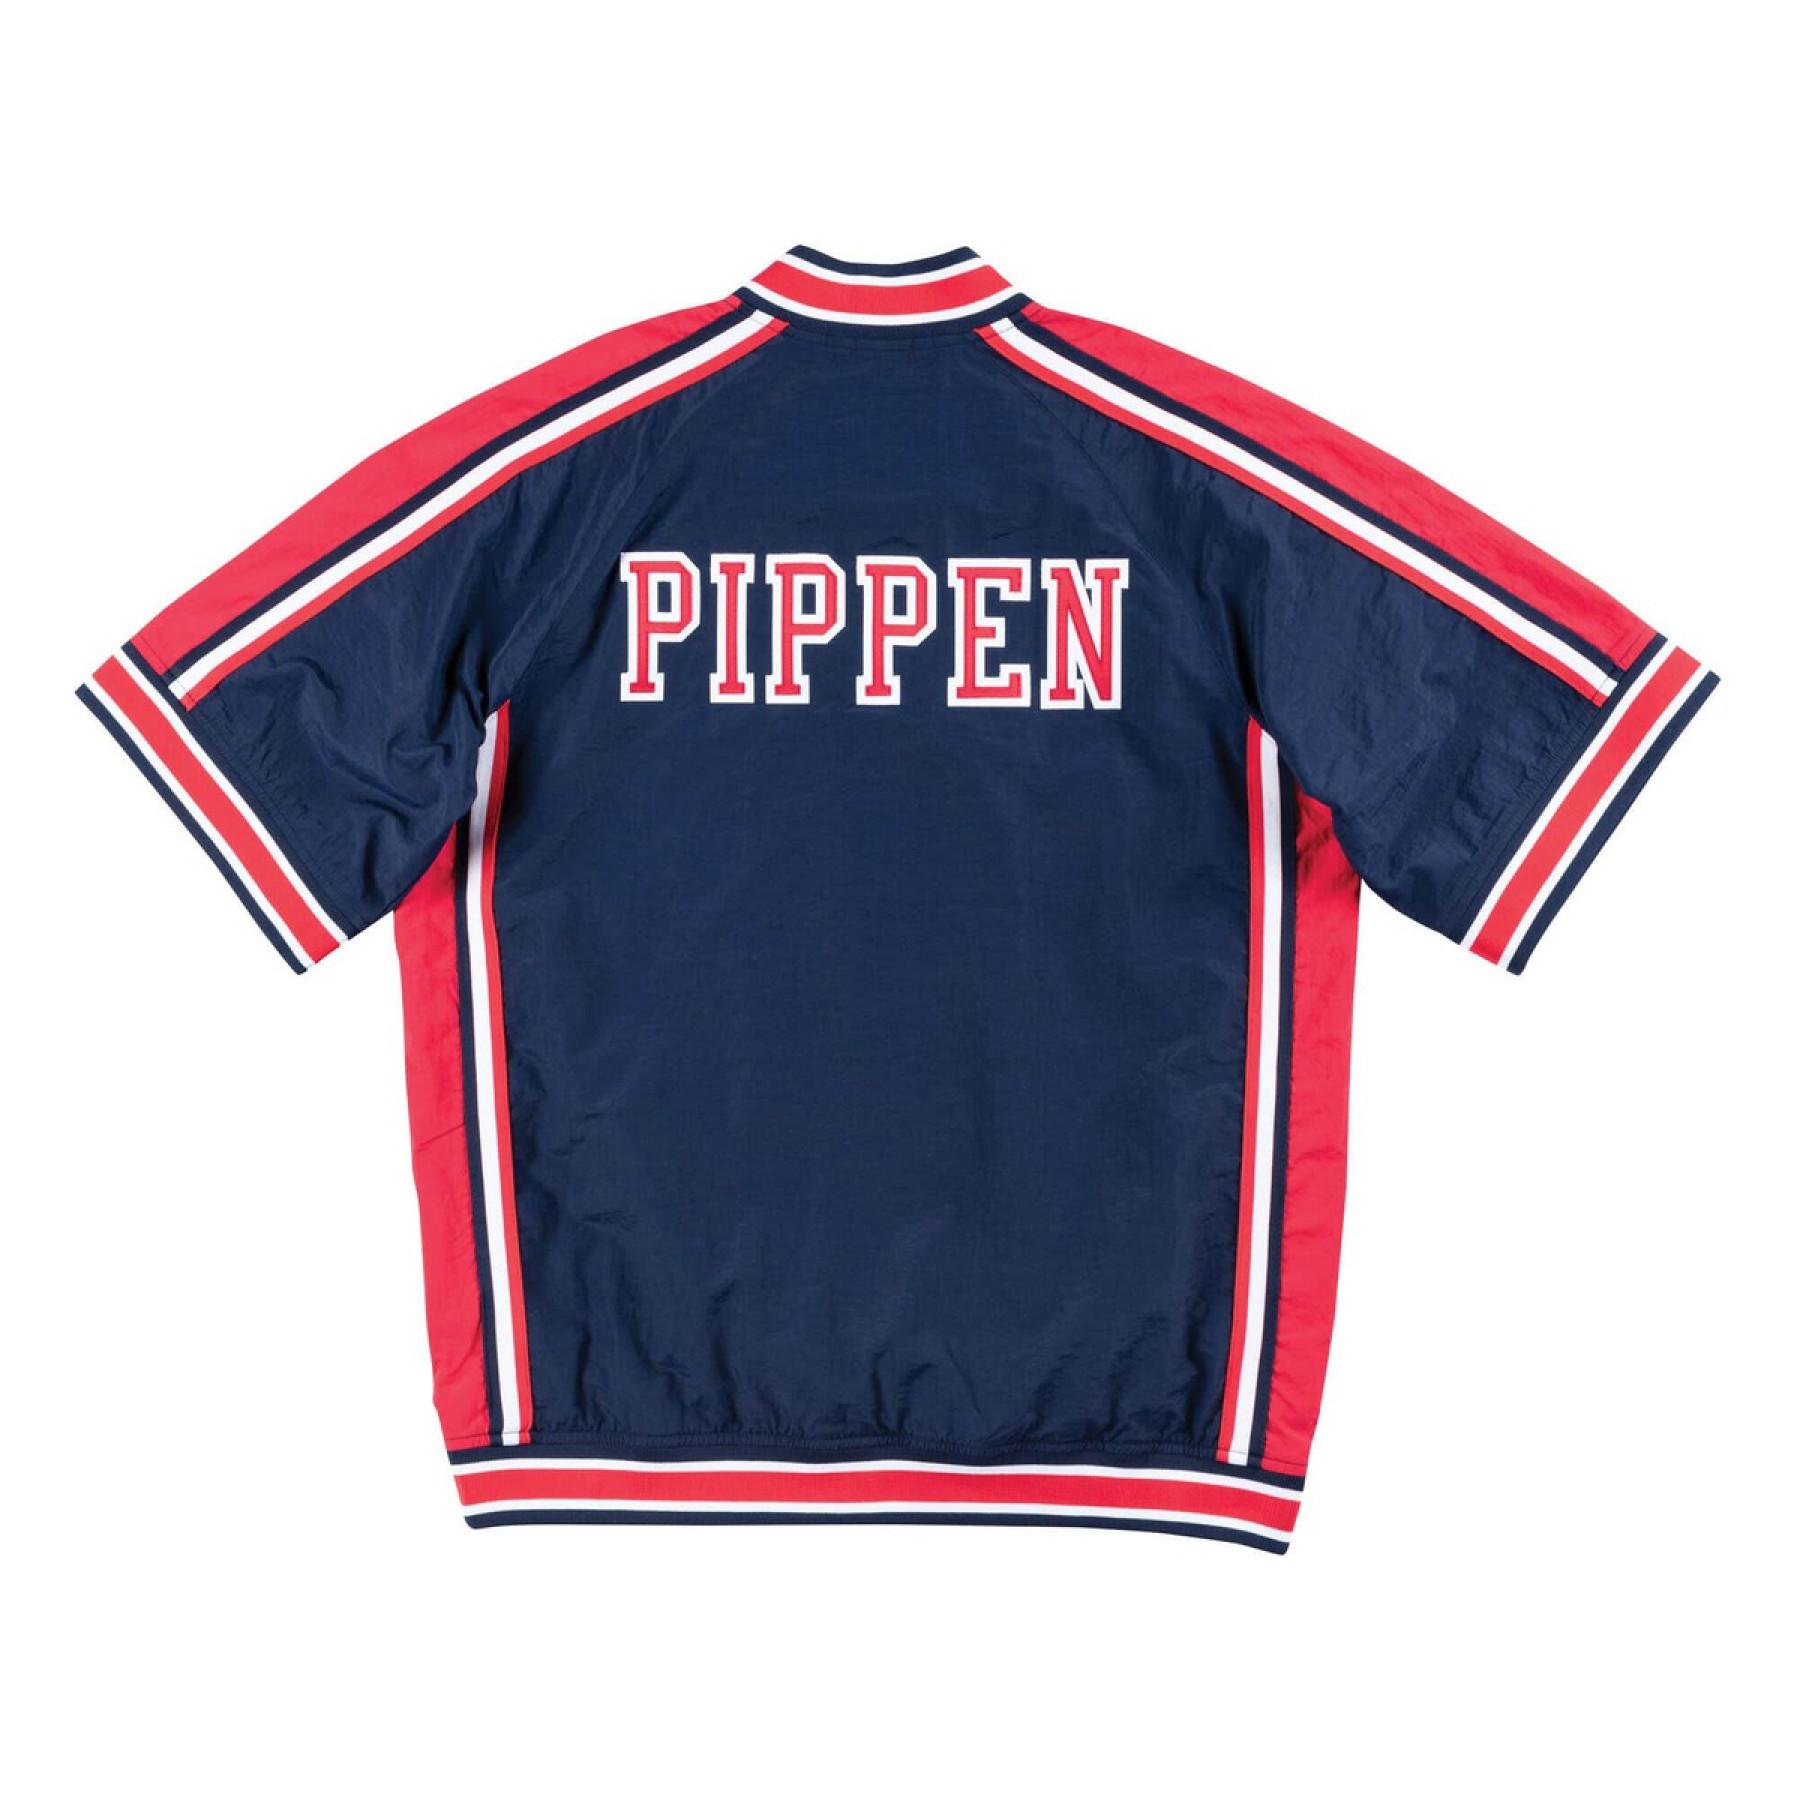 Team jas USA authentic Scottie Pippen